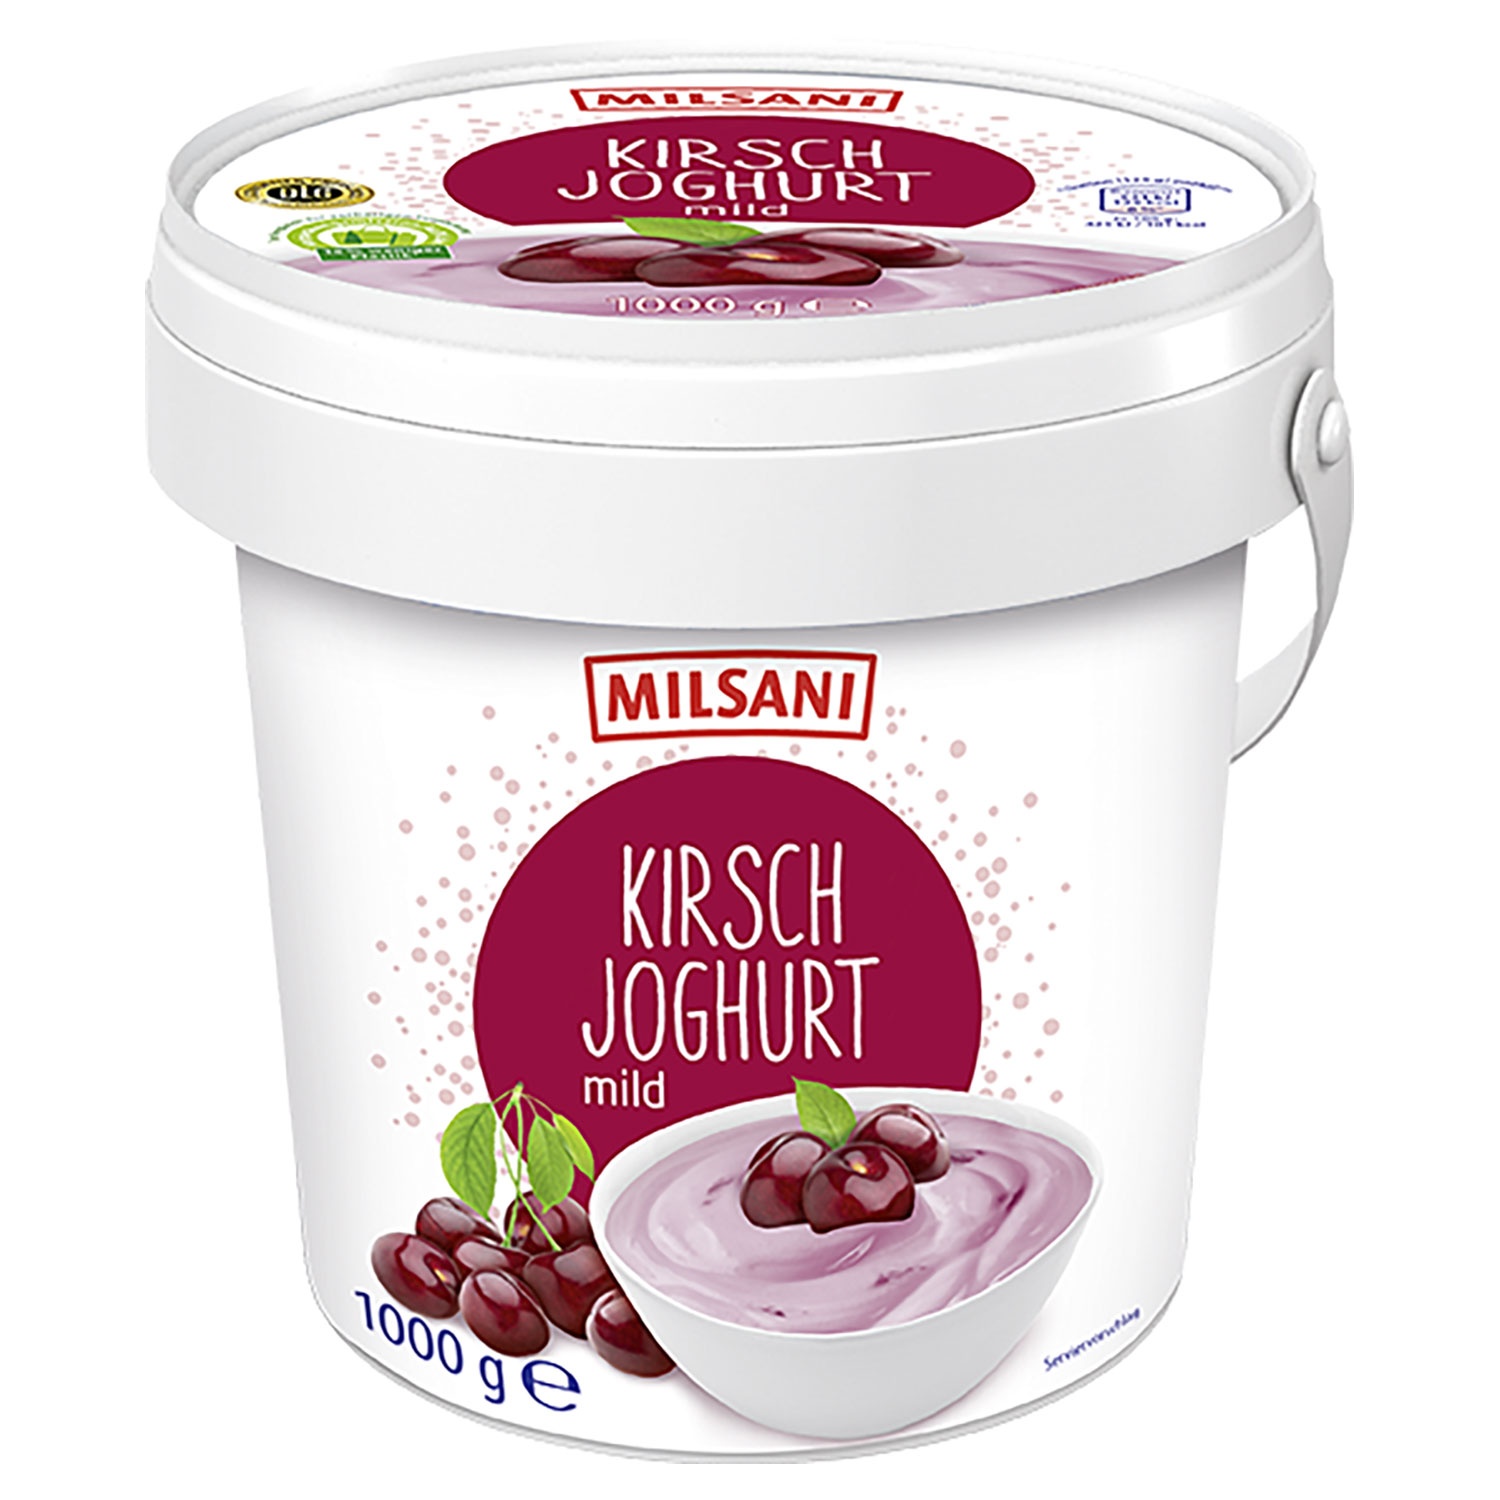 MILSANI Joghurt und Dessert 1 kg, Kirsch-Joghurt